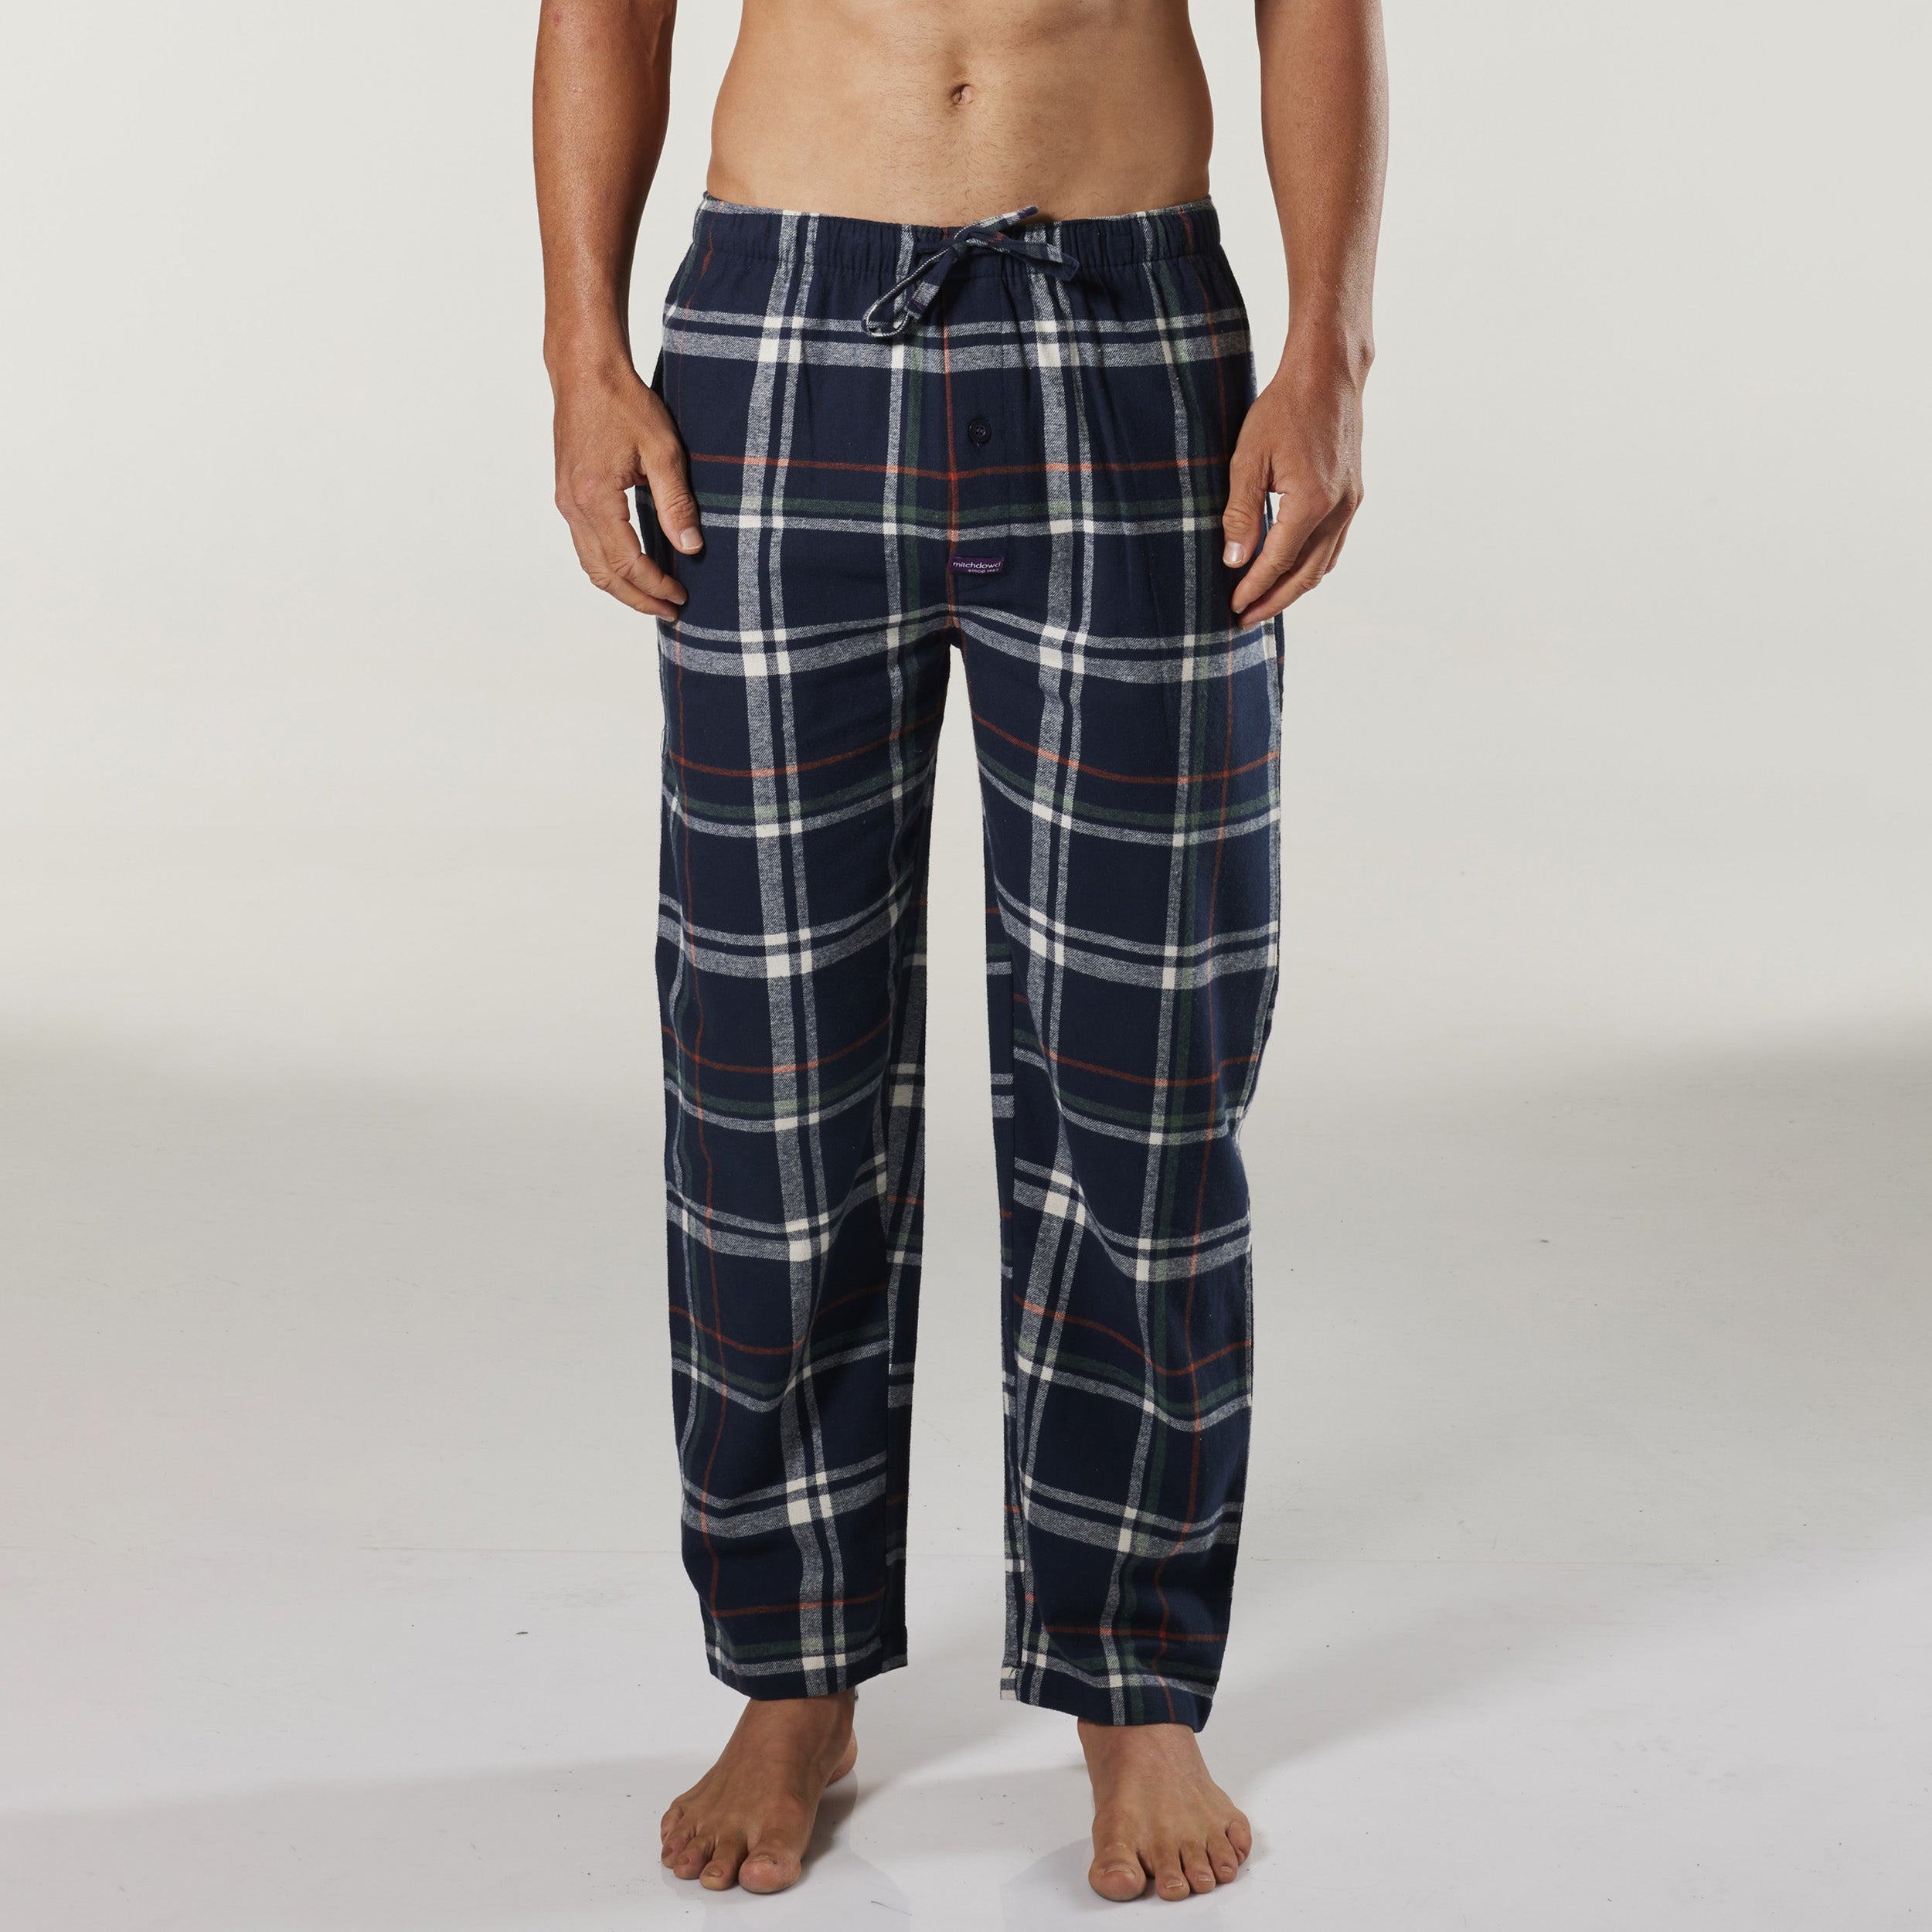 Men's Flannel Pajama Pants in Black and White | Zazzle